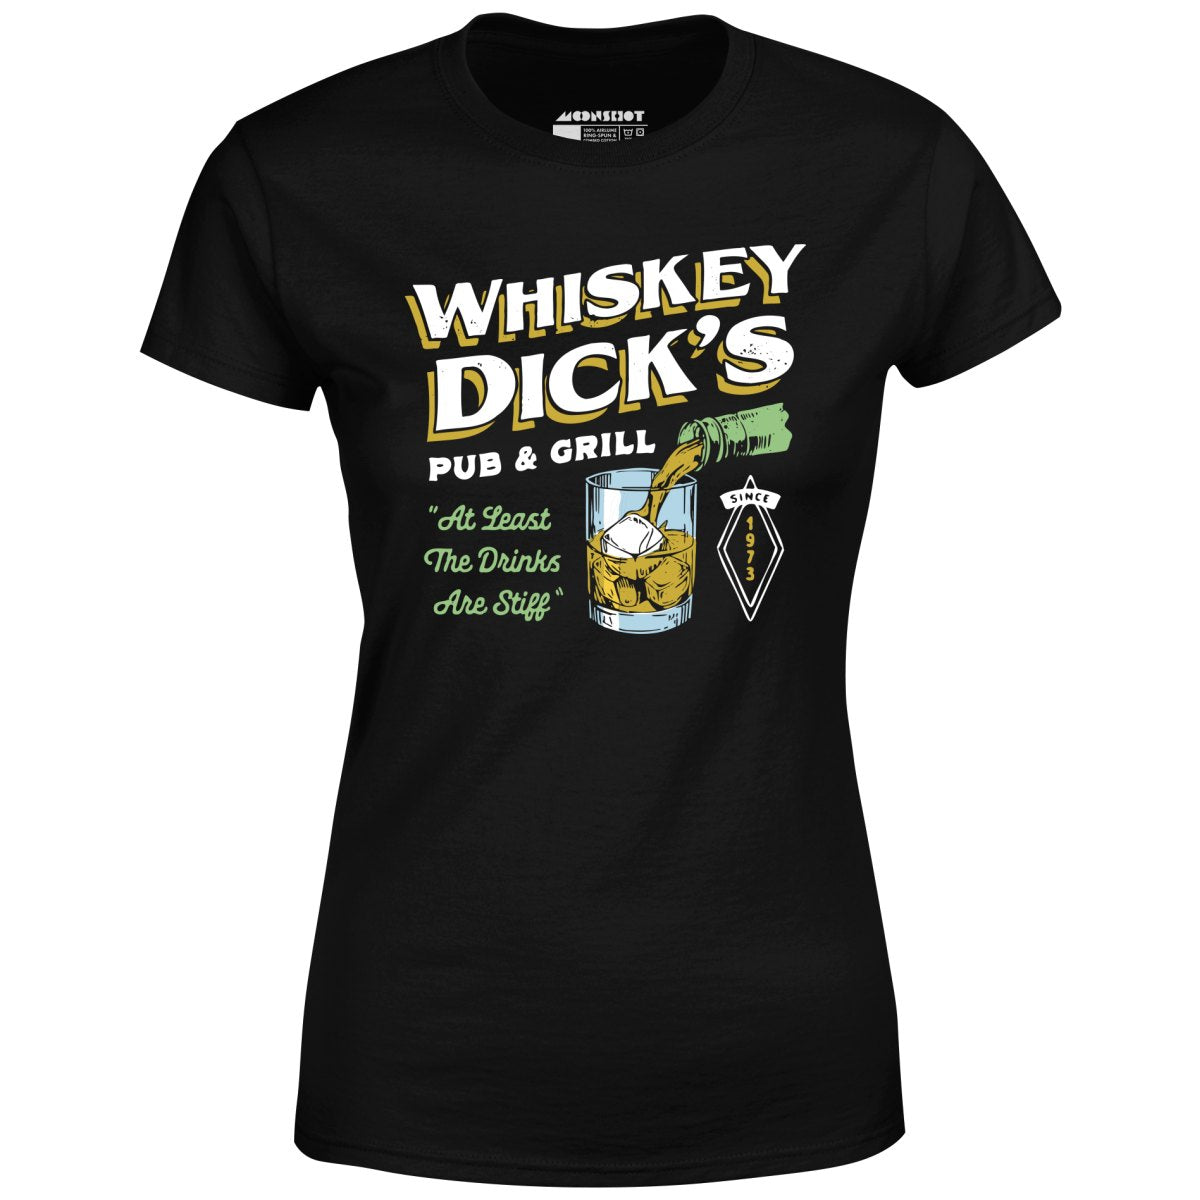 Whiskey Dick's Pub & Grill - Women's T-Shirt